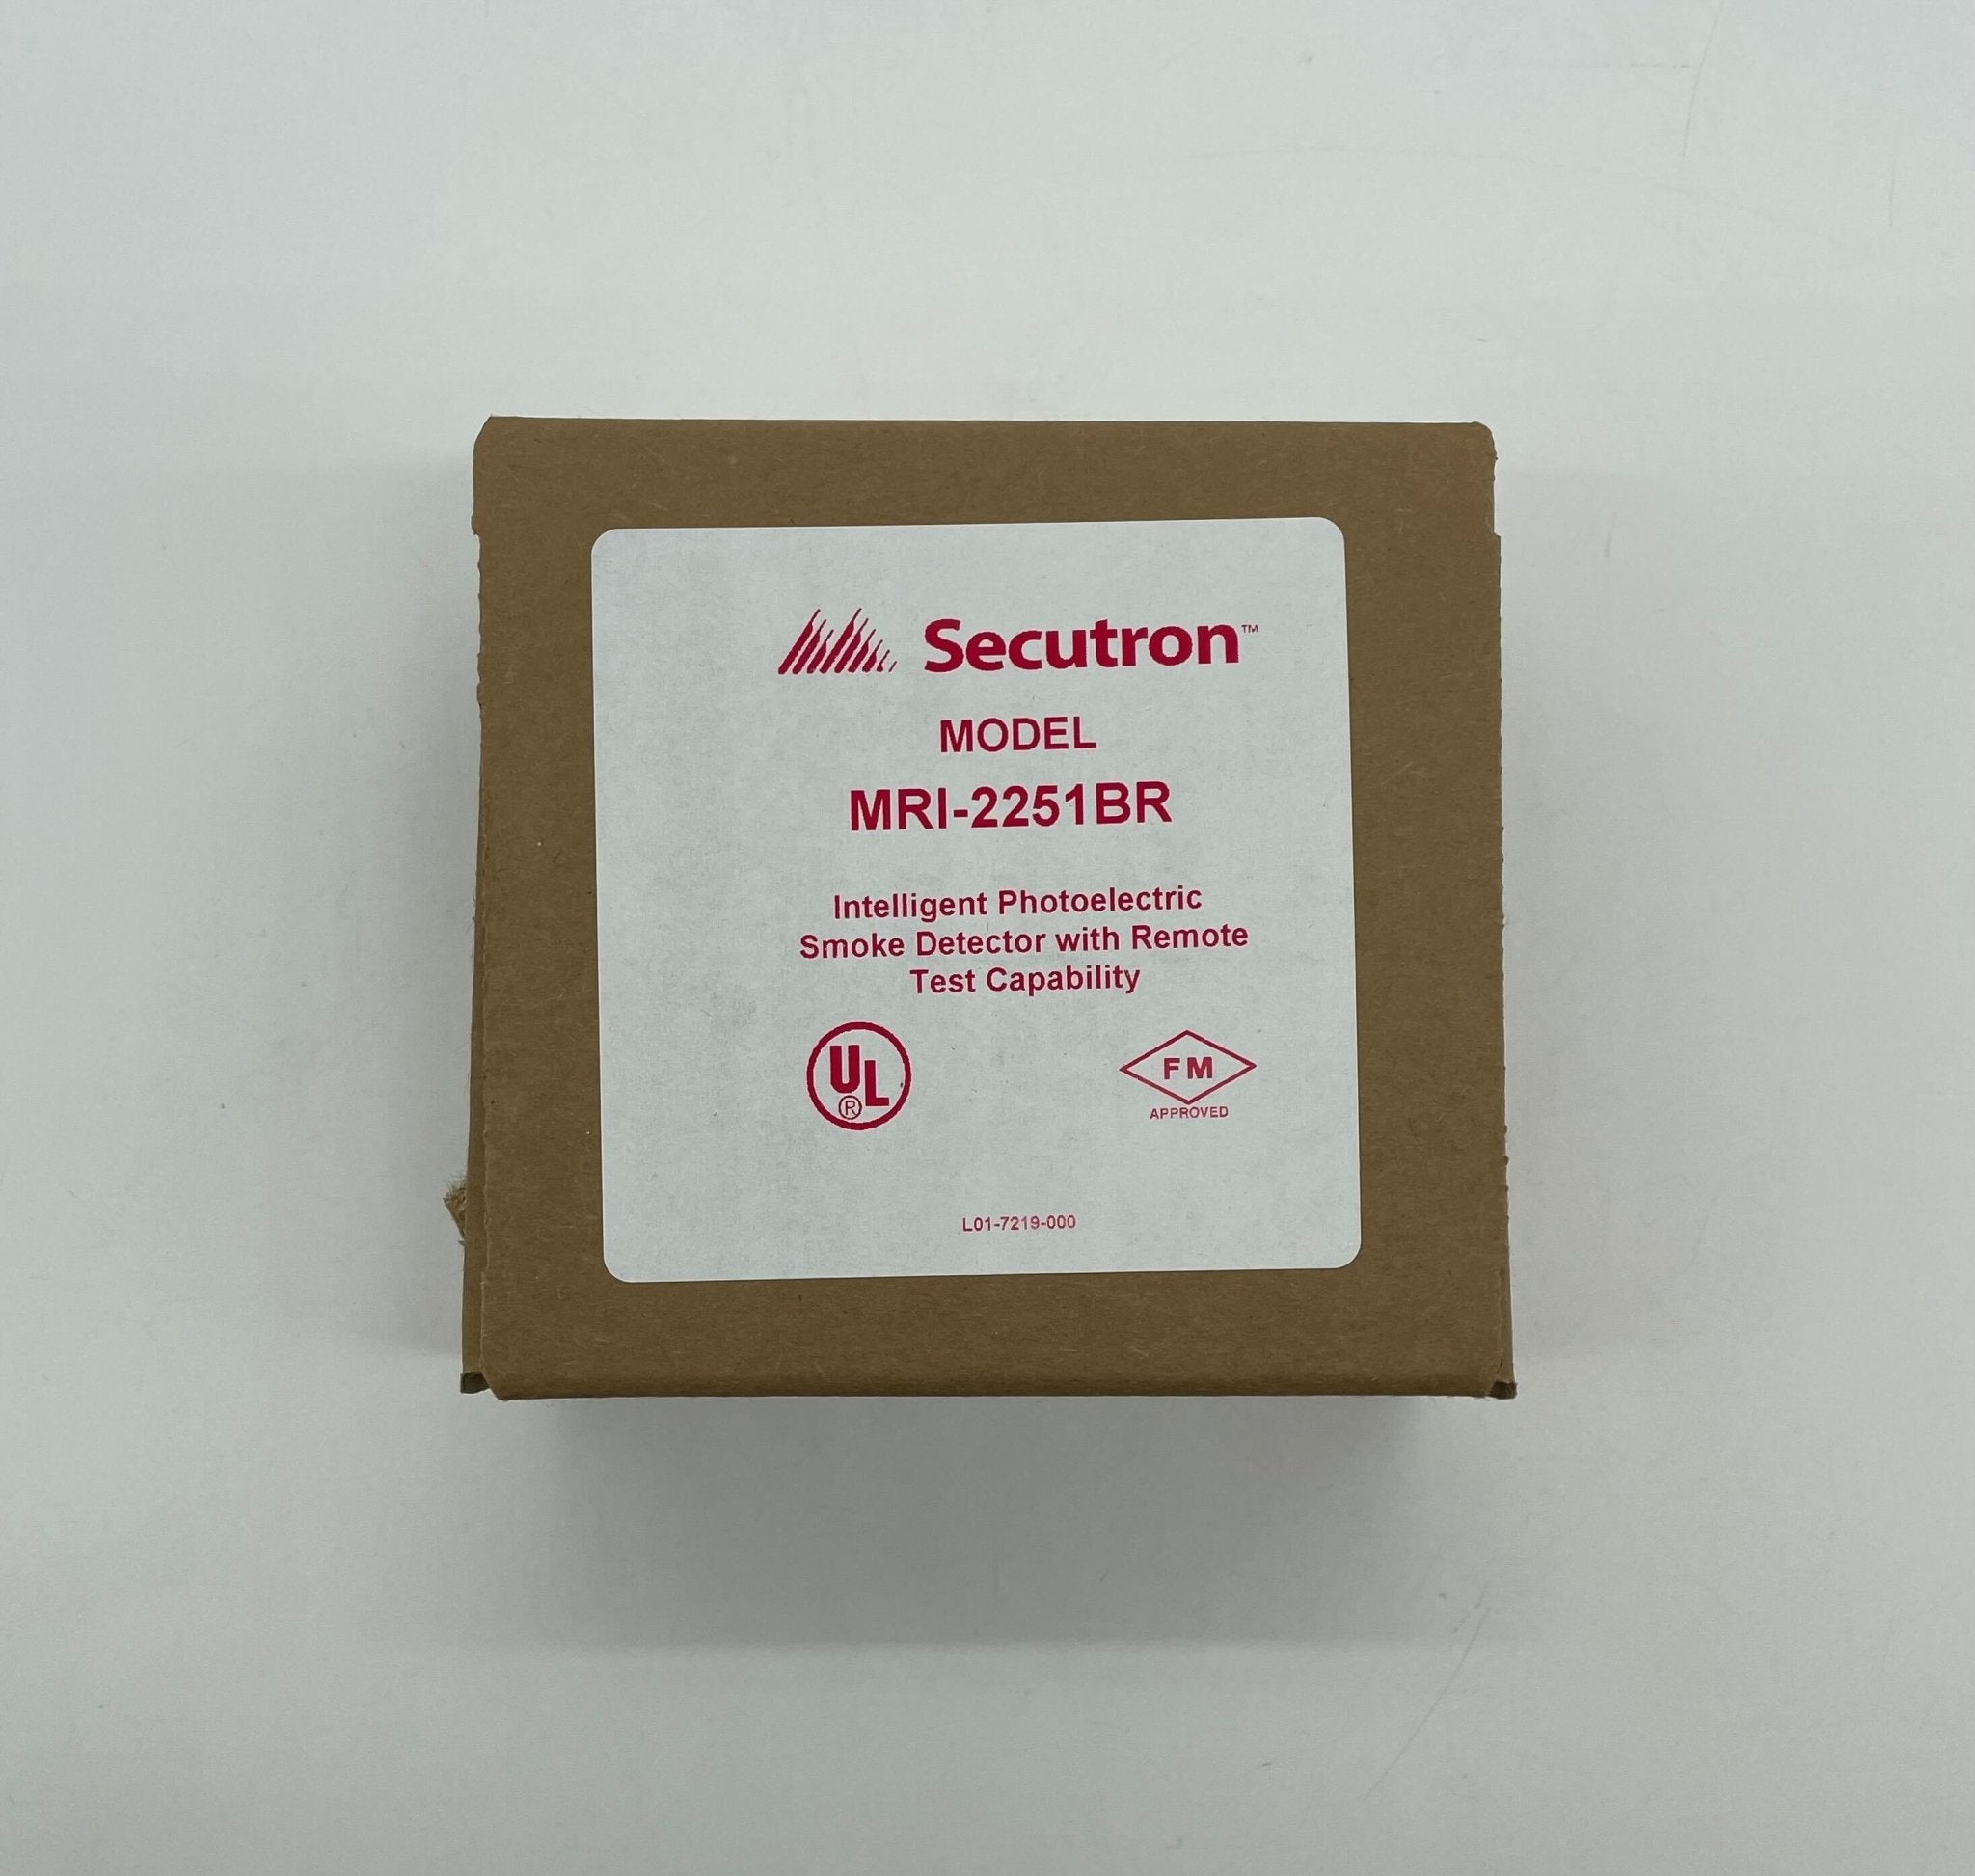 Secutron MRI-2251BR - The Fire Alarm Supplier